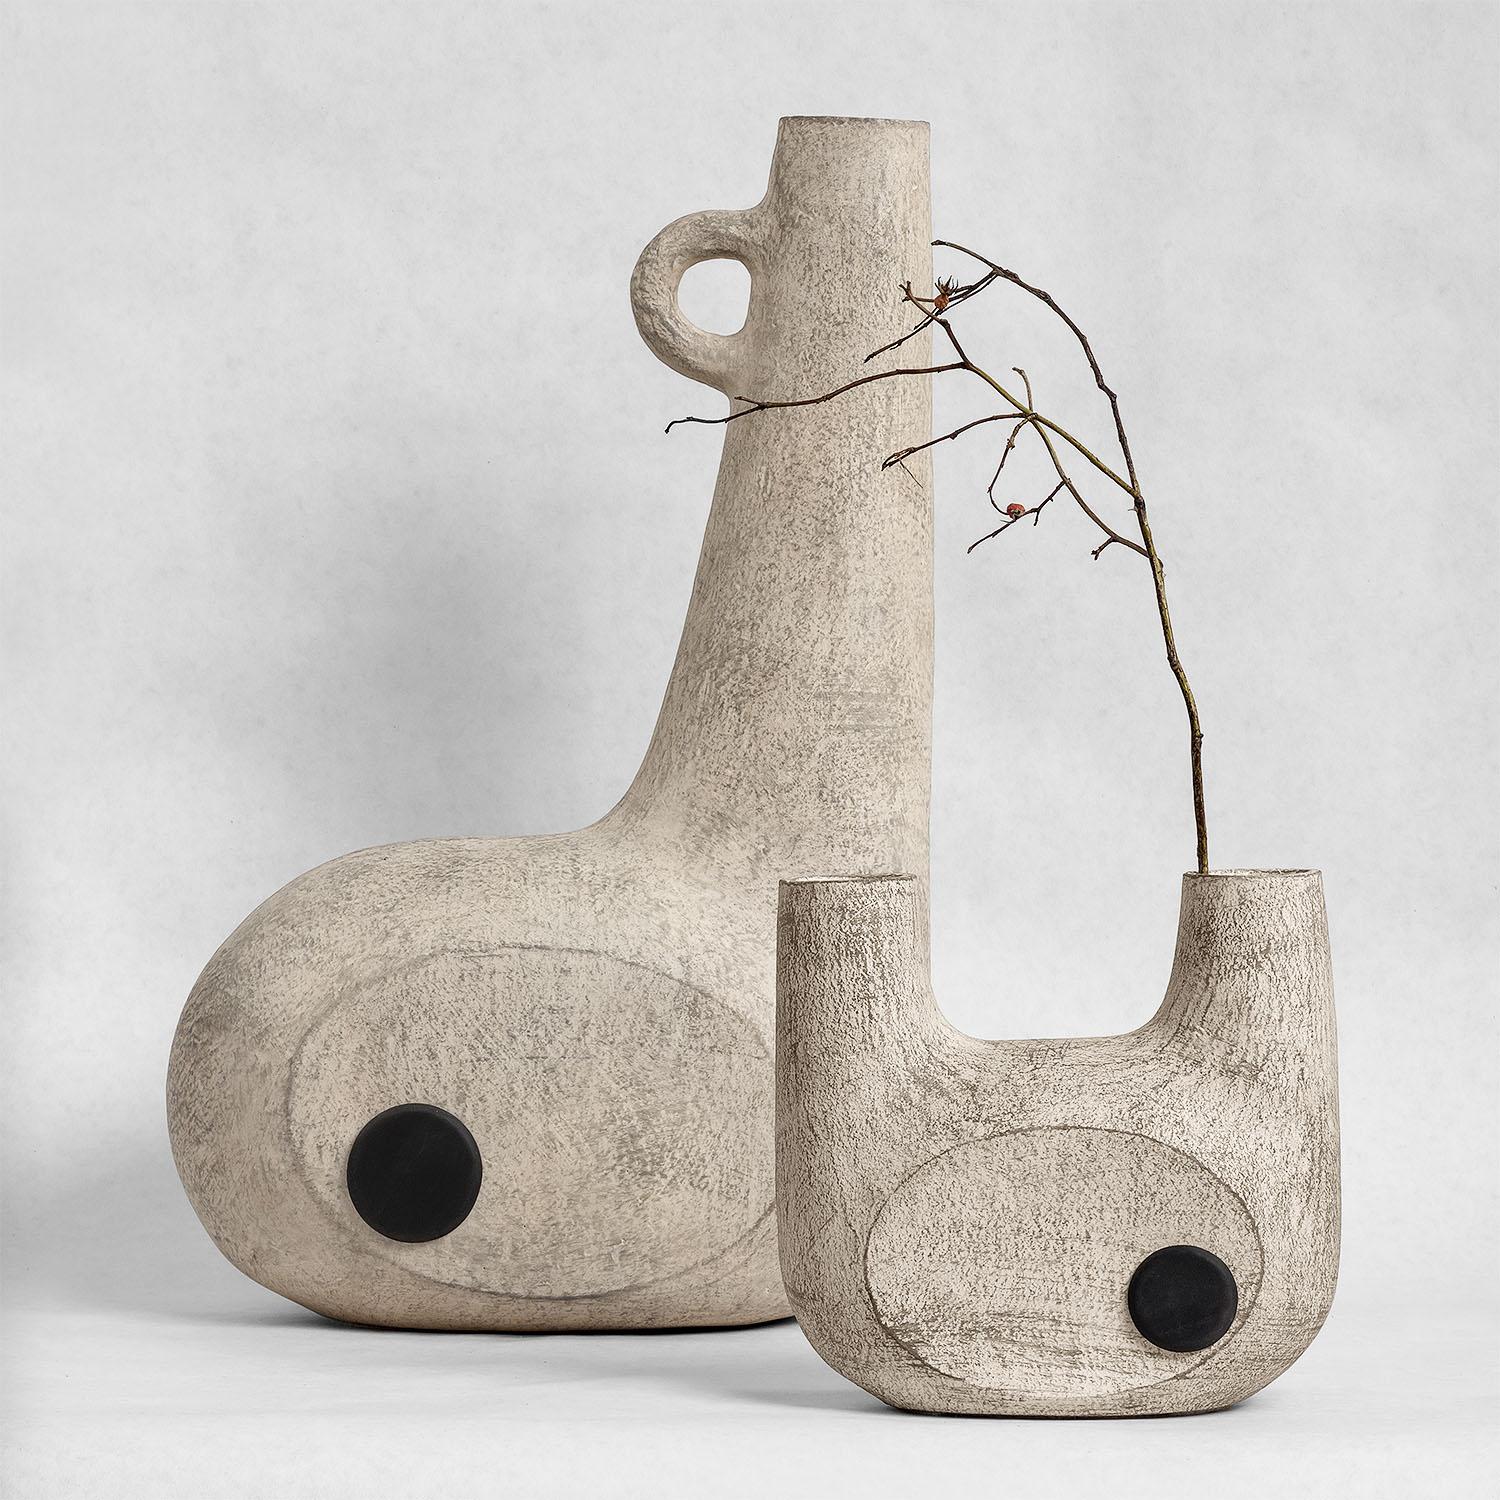 Contemporary sculpted pair of Ceramic vases - Bandura off white vases by Faina

Design: Victoriya Yakusha
Material: material: clay / ceramics
Dimensions:
Small: 20.5 x 9 x H 19 cm
Big: 31.5 x 15 x H 50 cm

Made in the style of ethnic minimalism, the